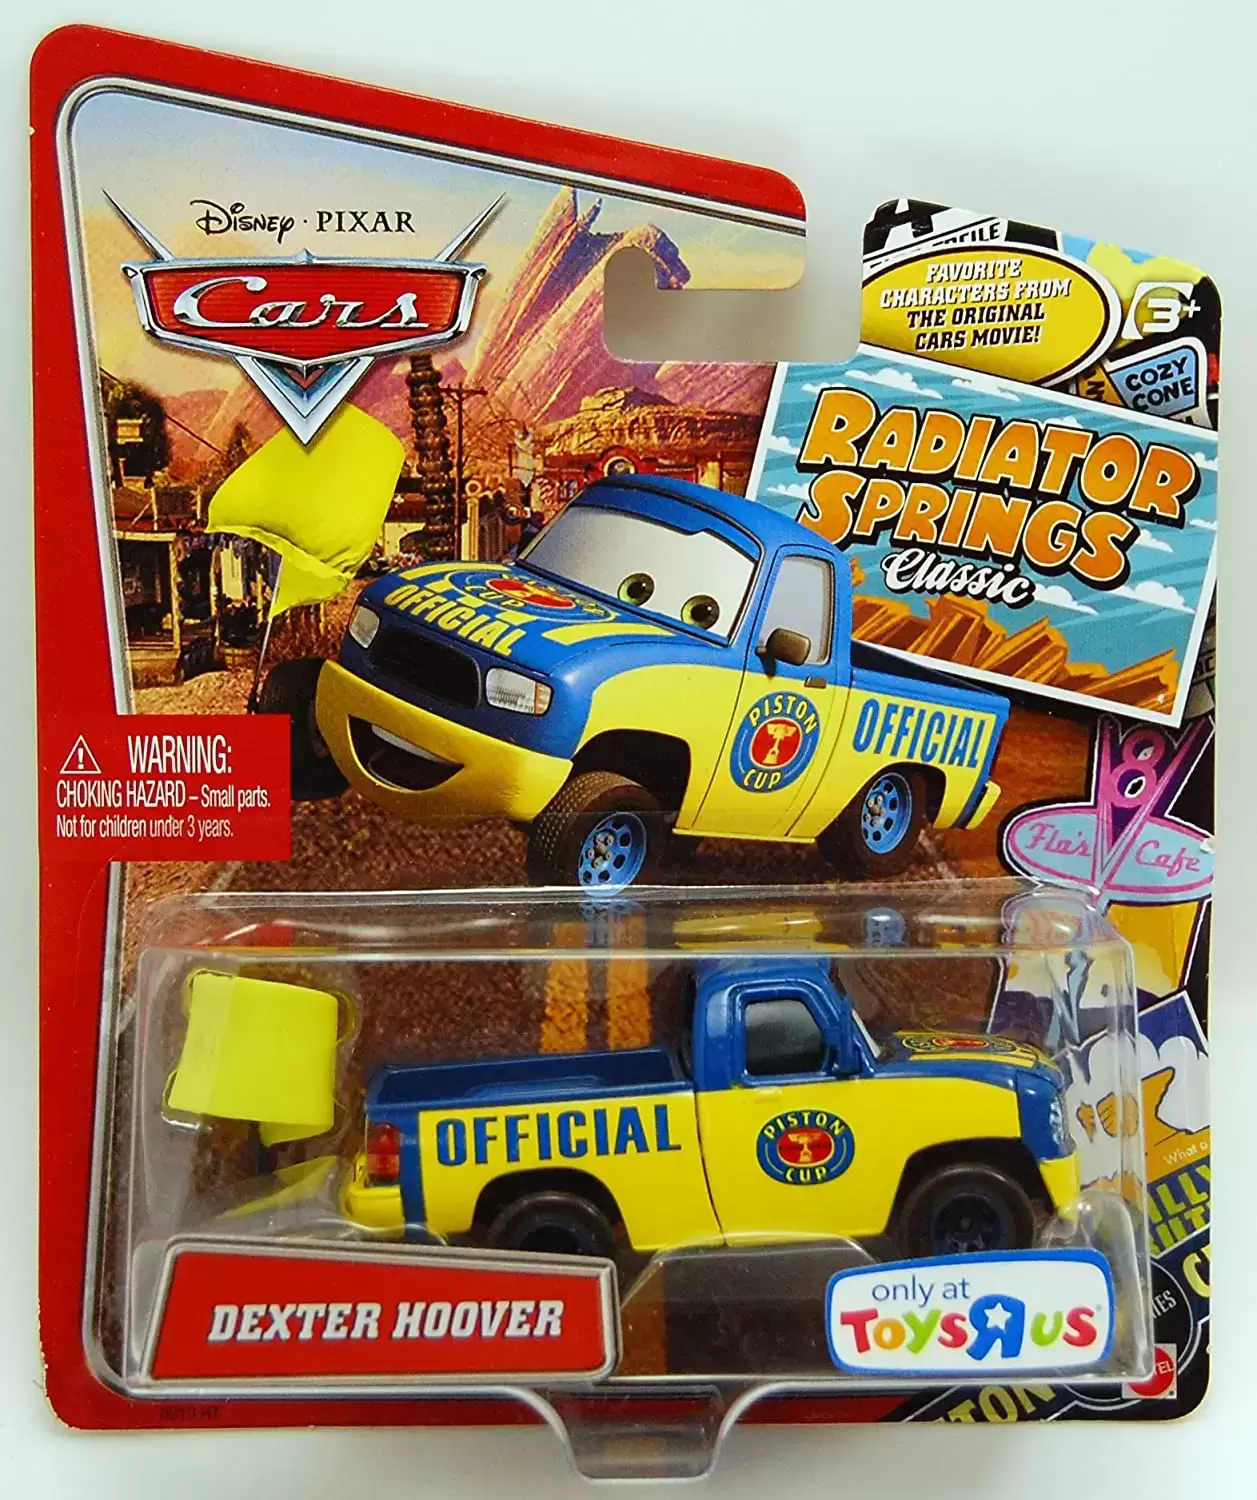 Cars 2 models - Dexter Hoover